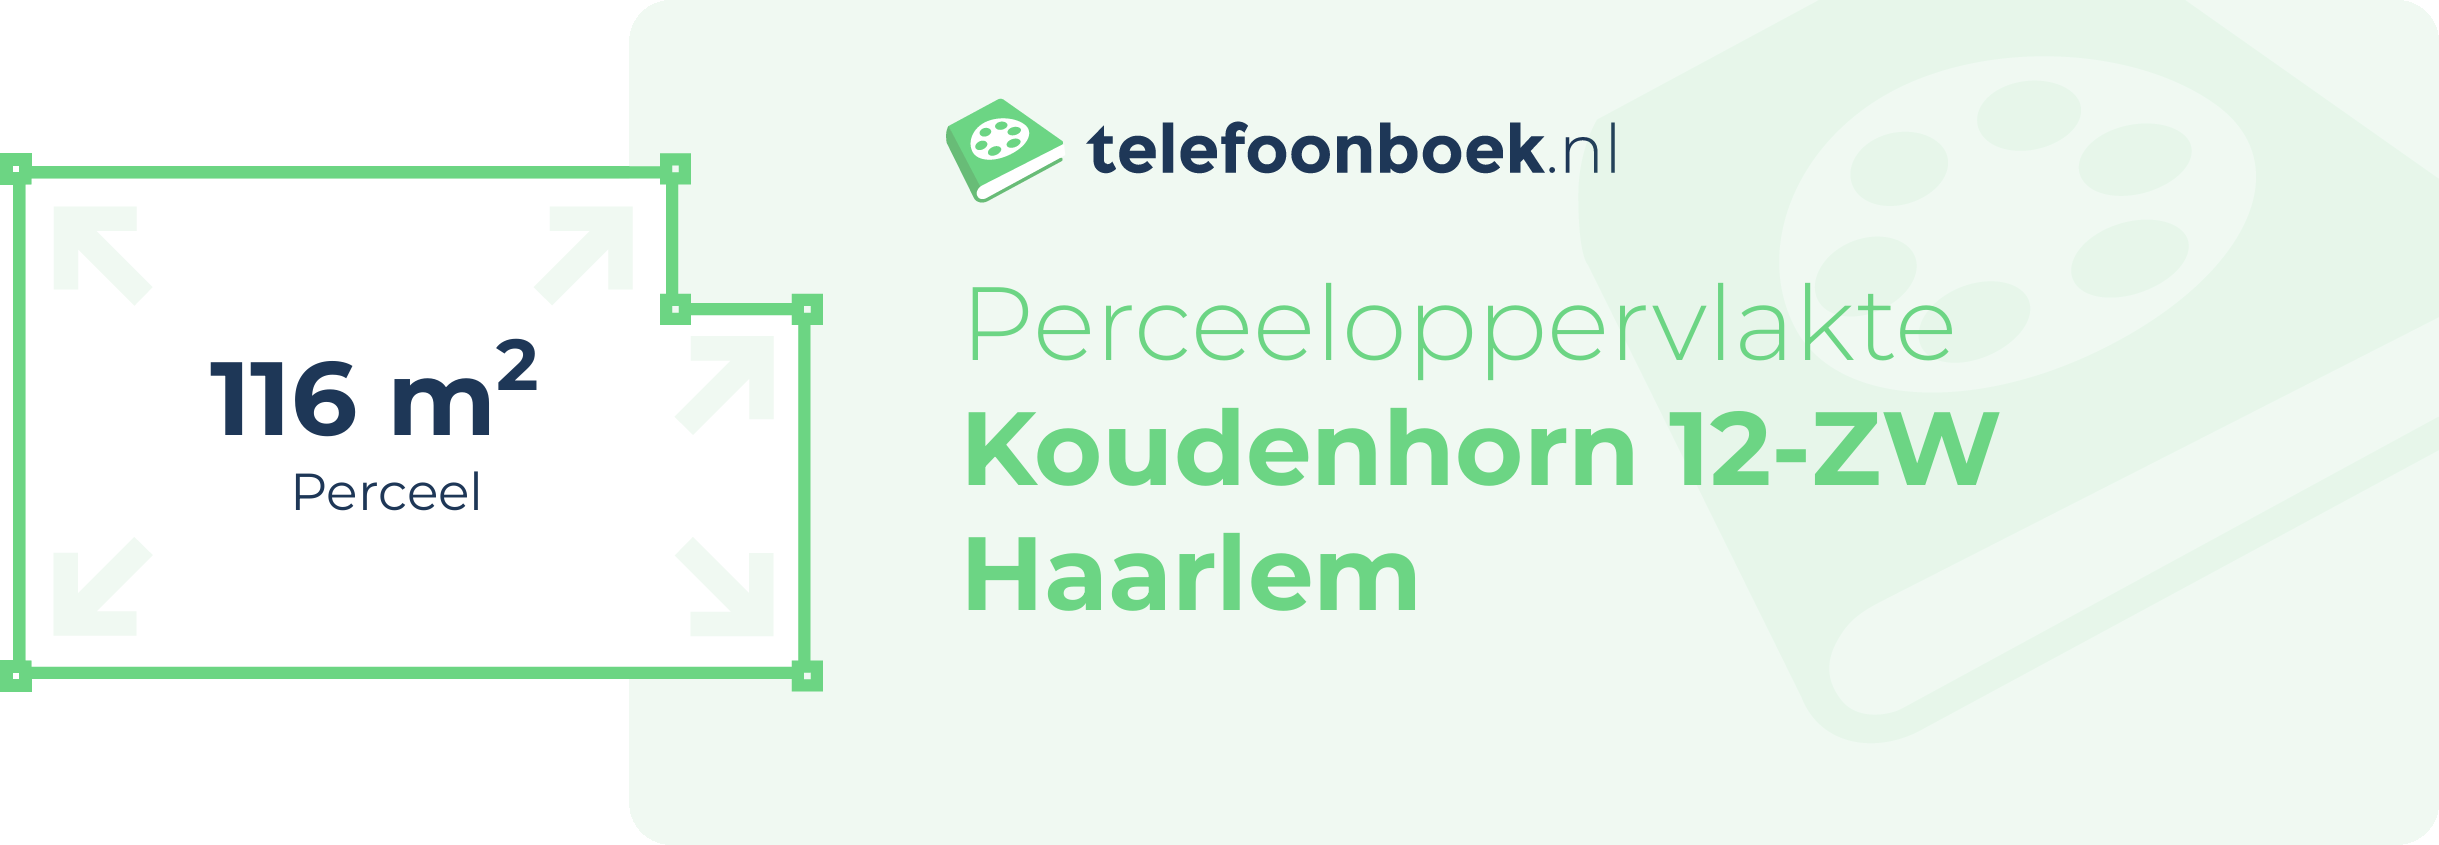 Perceeloppervlakte Koudenhorn 12-ZW Haarlem